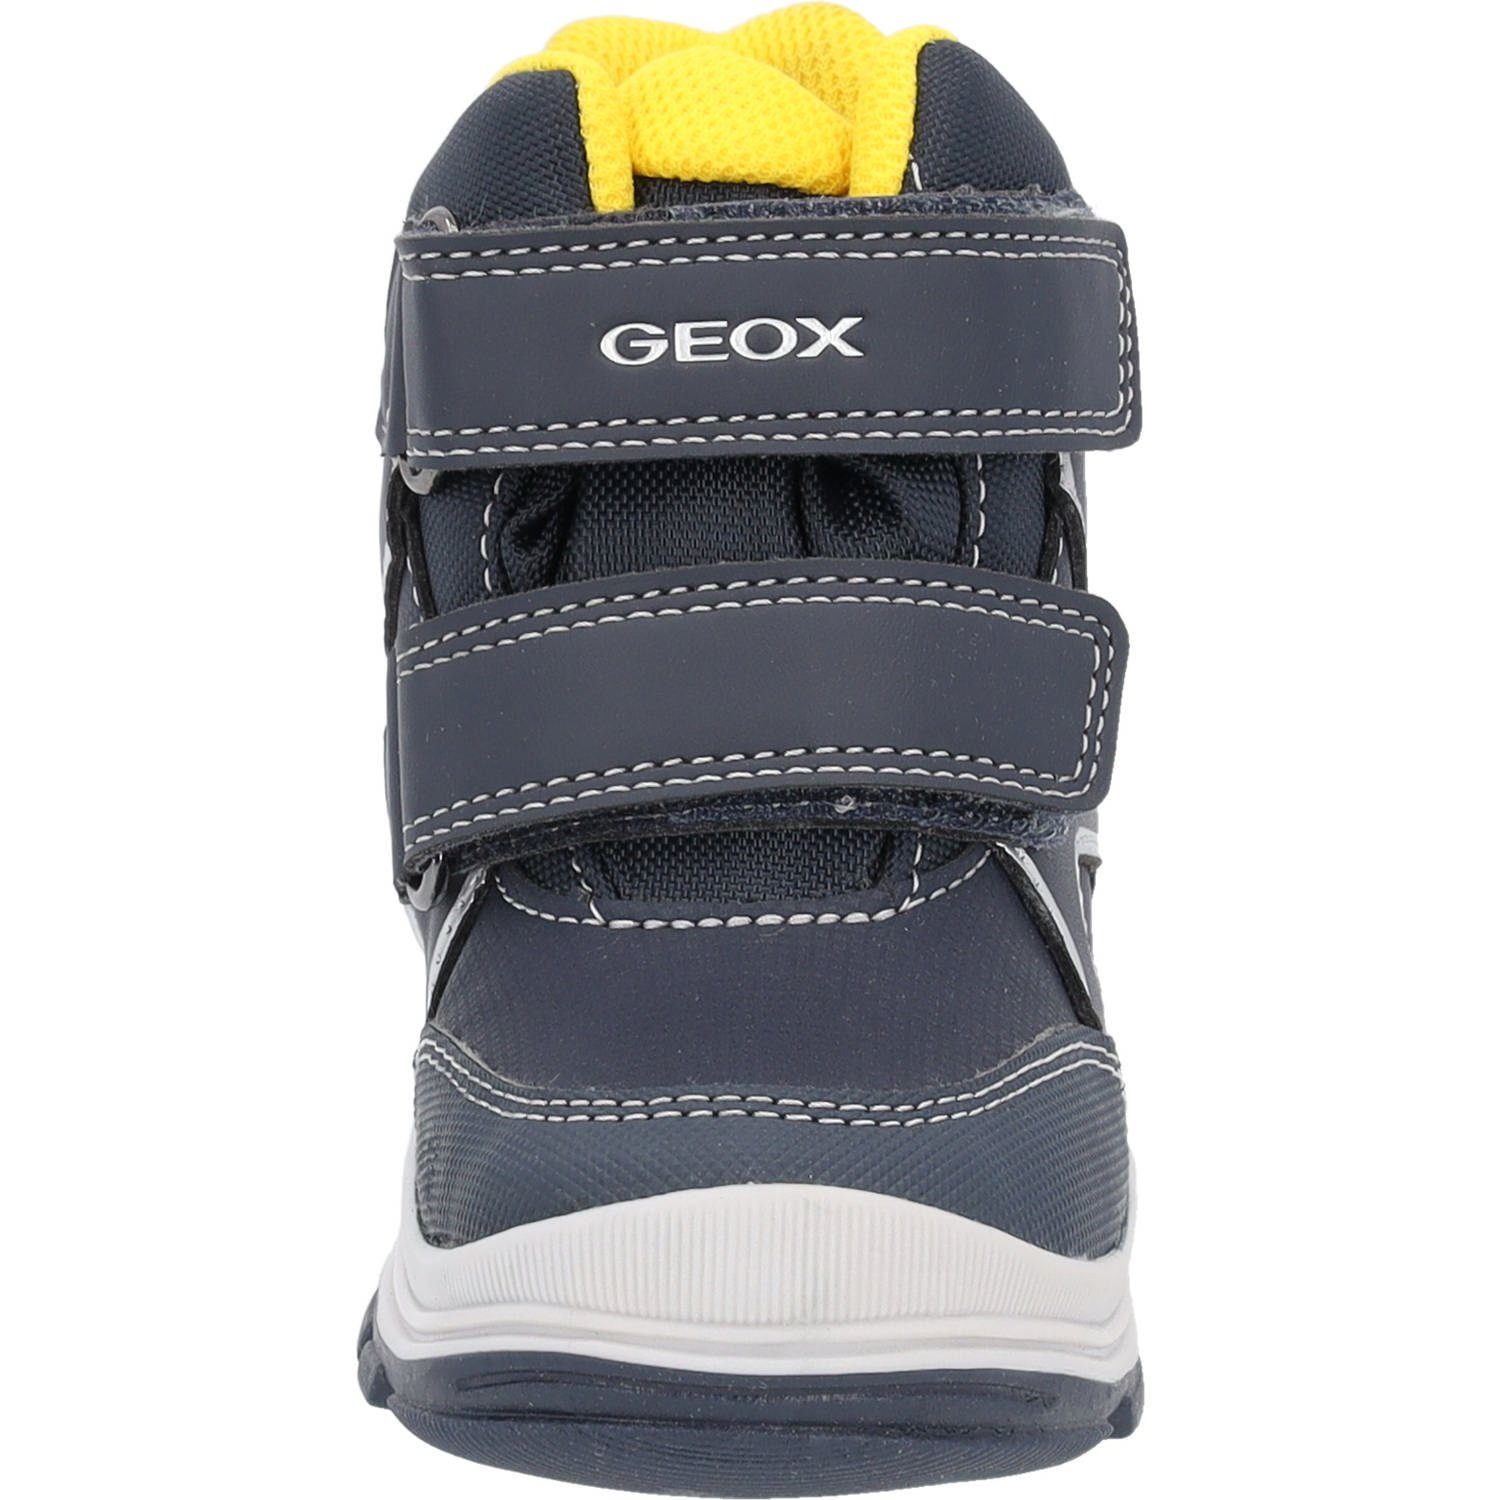 Geox Geox B263VD Stiefel (07101986) navy/yellow